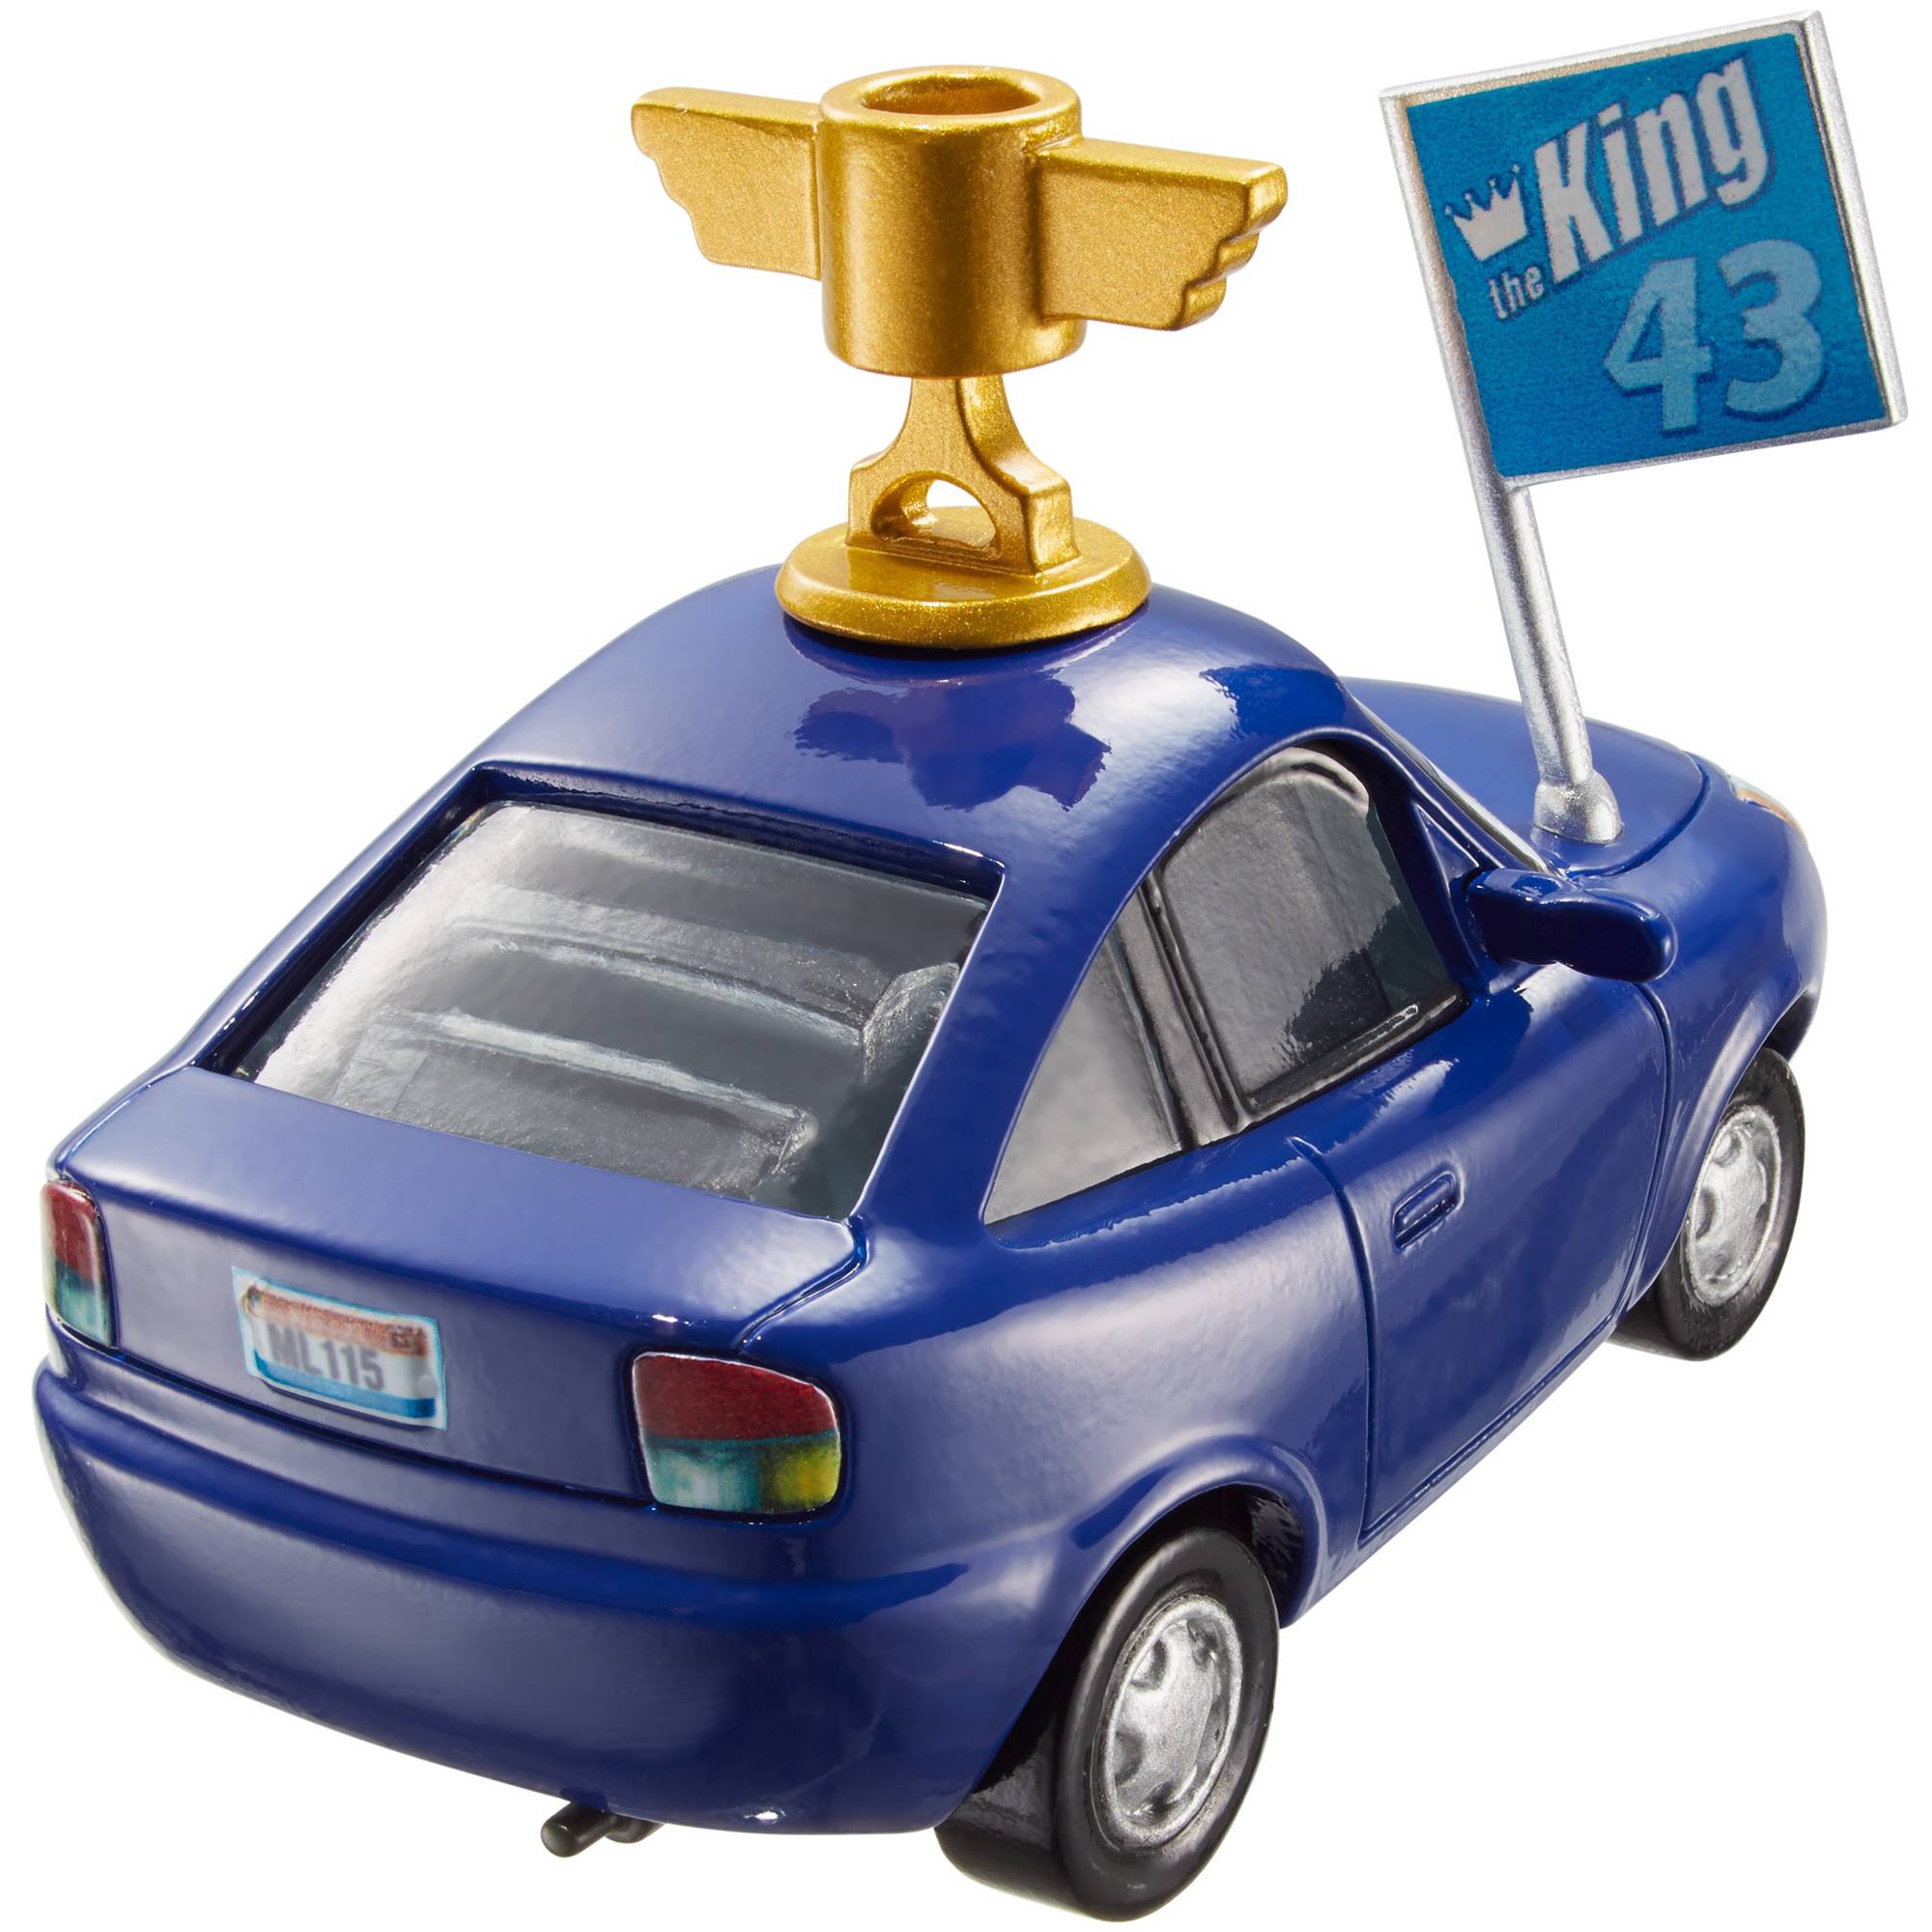 Disney Pixar Cars J Low Lee Super Chase (2015) Mattel Die Cast Toy Car - image 2 of 2